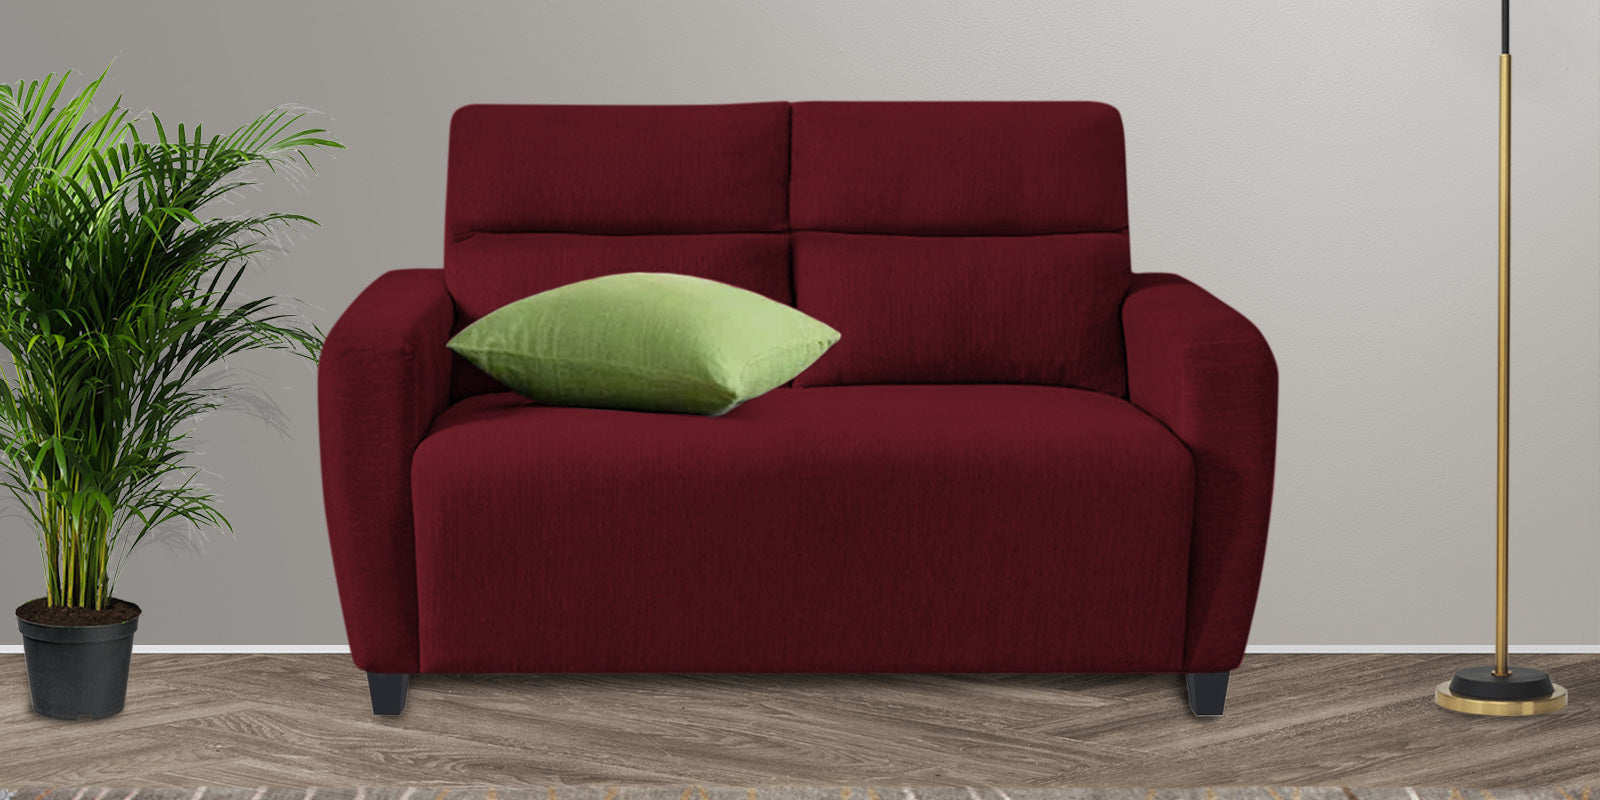 Bakadi Fabric 2 Seater Sofa in Blood Maroon Colour